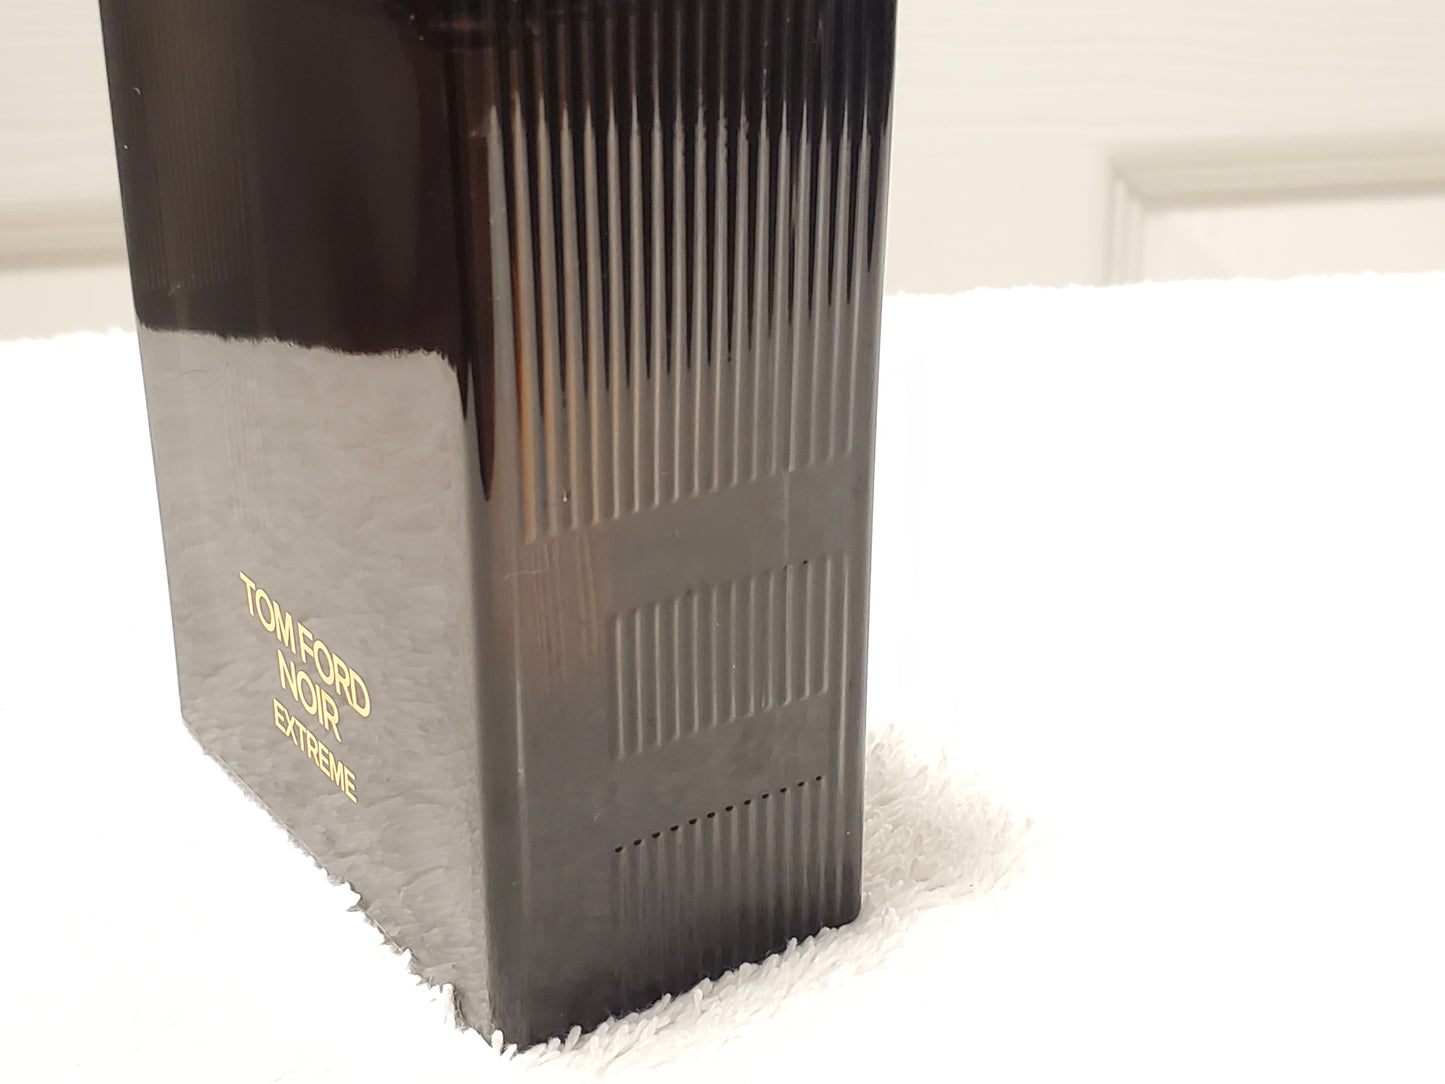 New Tom Ford Noir Extreme Men's Cologne Spray 3.4 oz Bottle Made in Switzerland